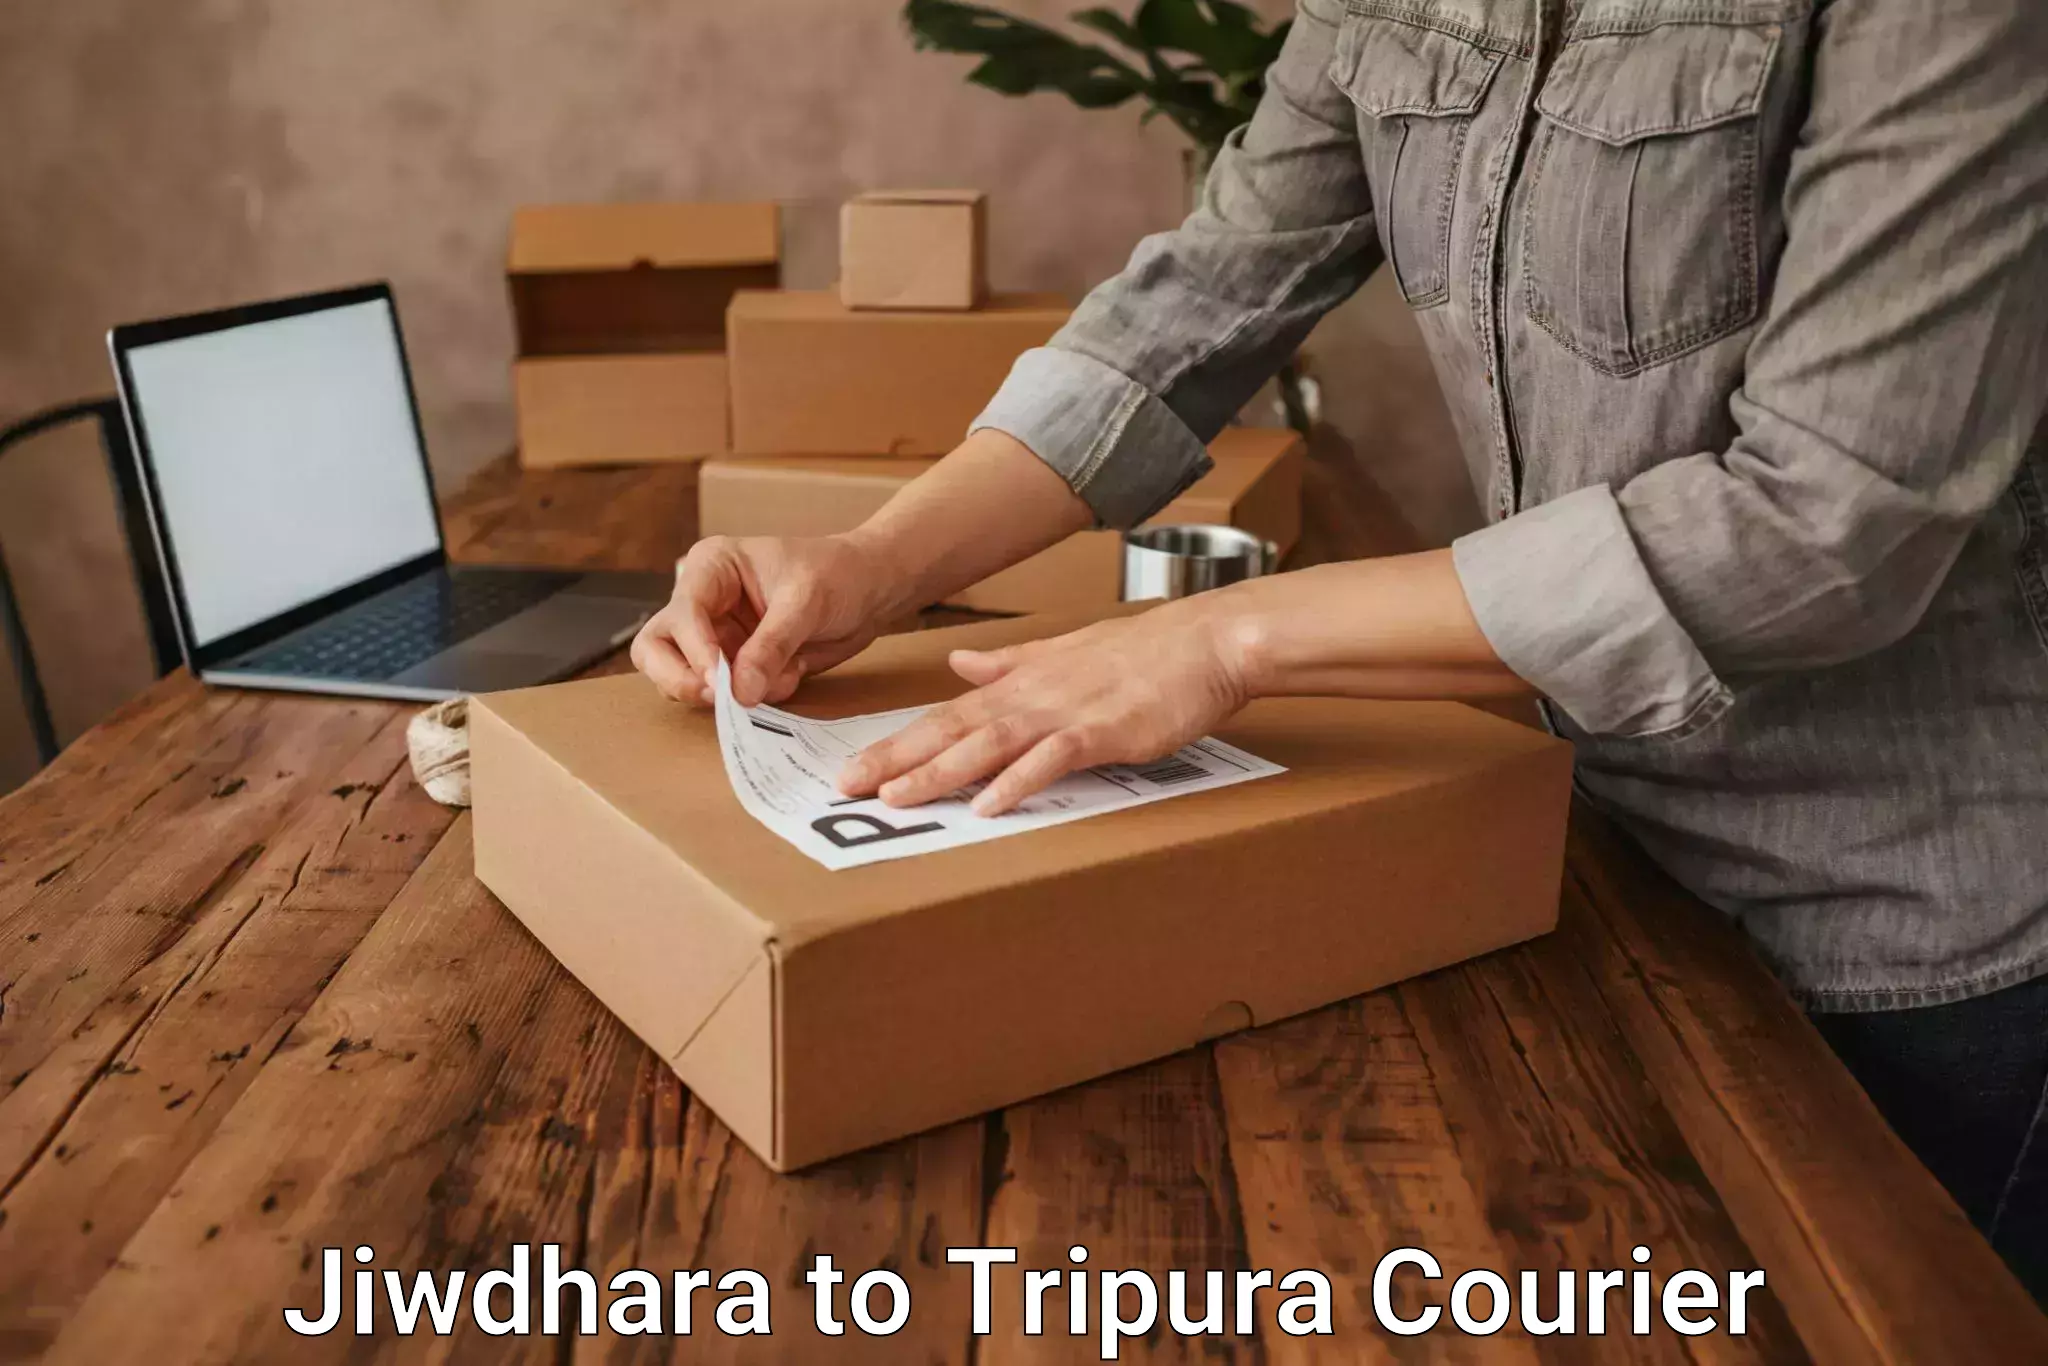 Reliable moving assistance Jiwdhara to Tripura